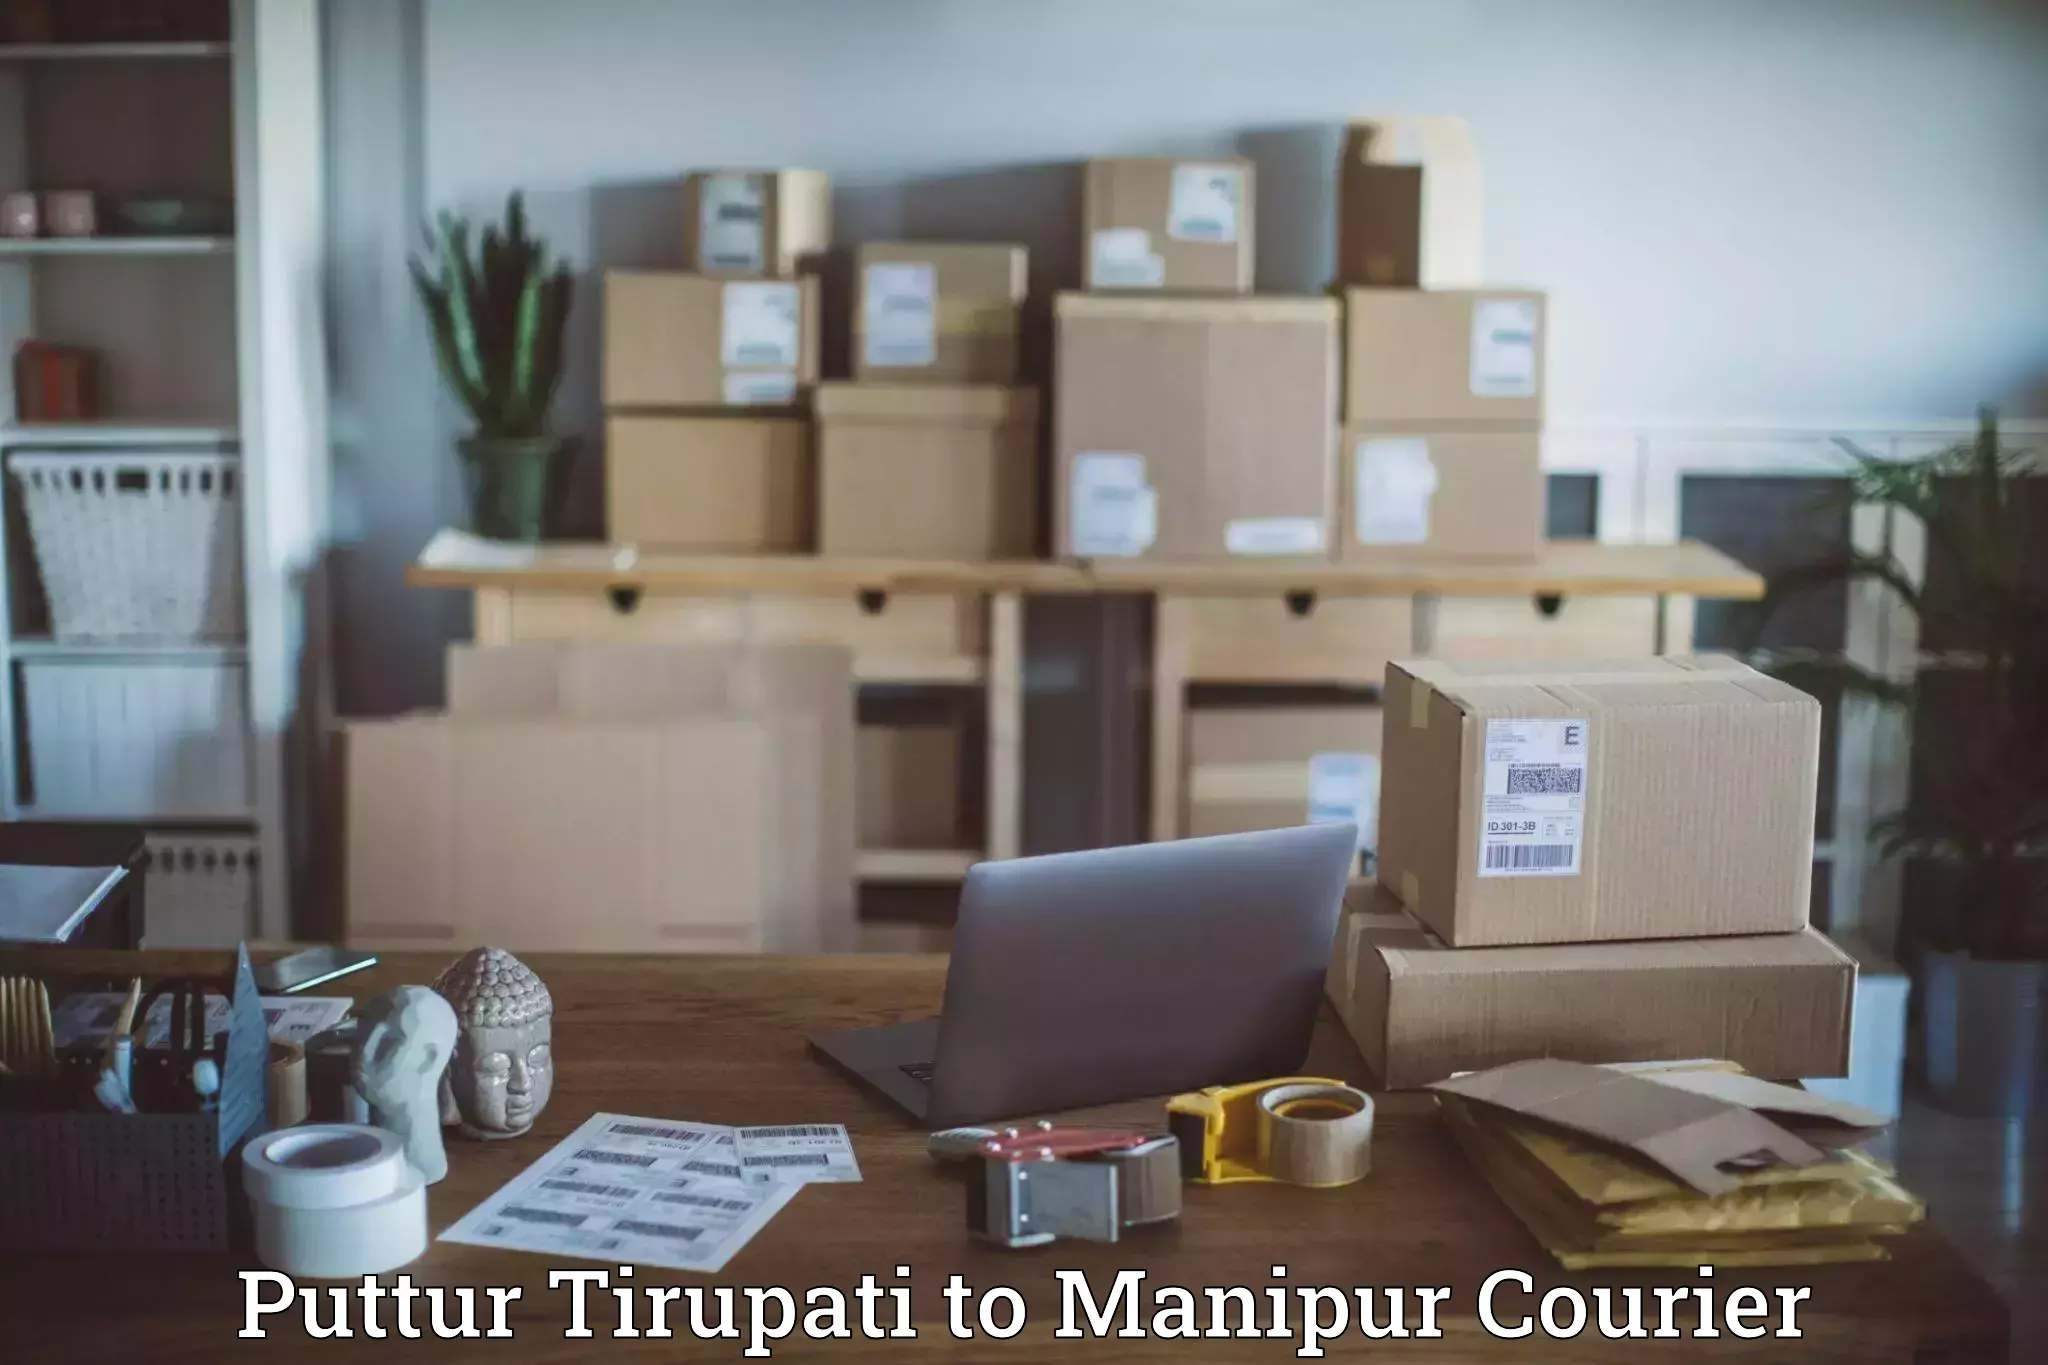 Efficient order fulfillment Puttur Tirupati to Chandel